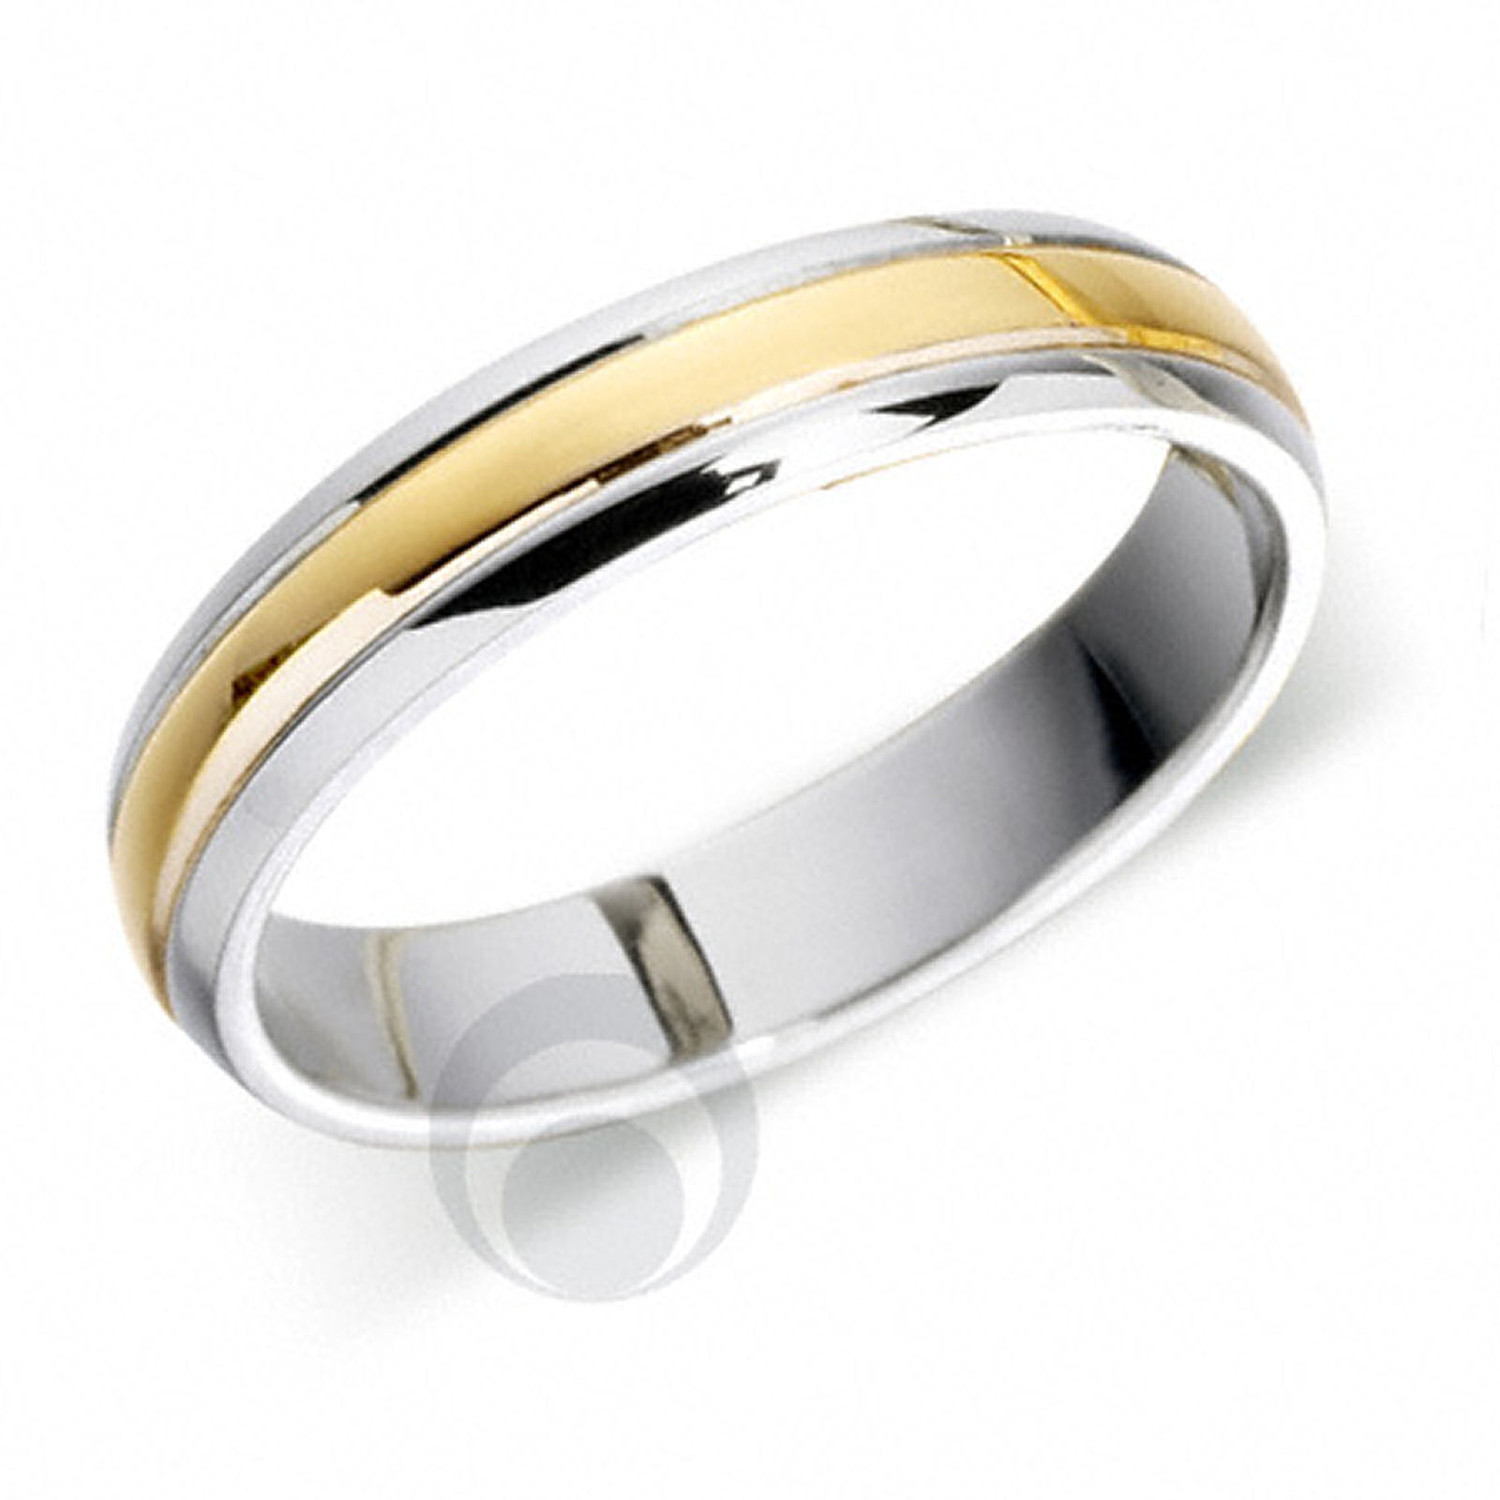 Platinum & 18ct White Gold Wedding Ring Wedding Ring from